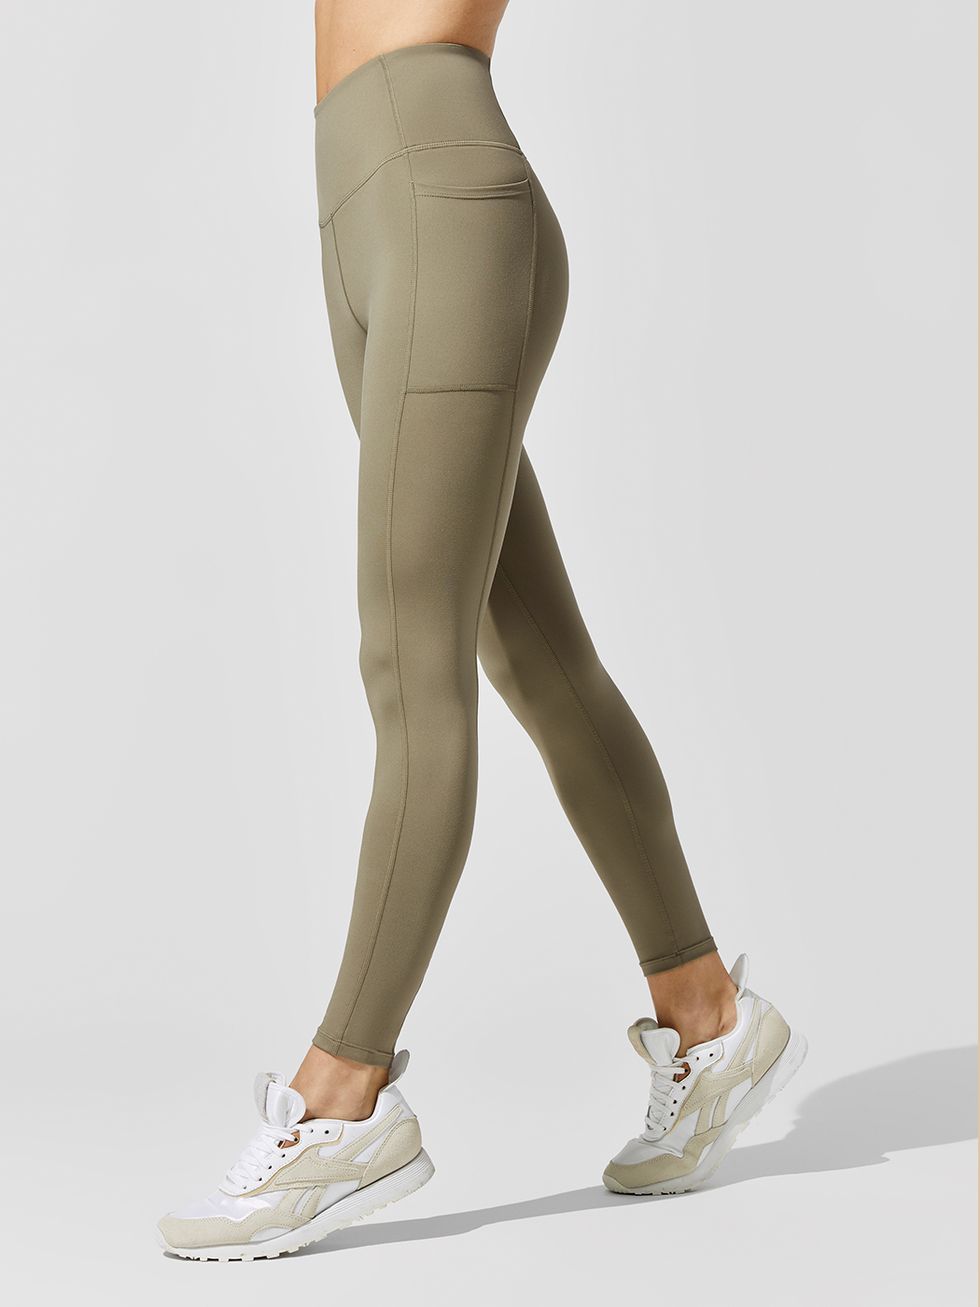 discount wholesale online NWT Lululemon Align HR Pants 25” Side Pockets on Leggings  Size 8 Pastel Blue